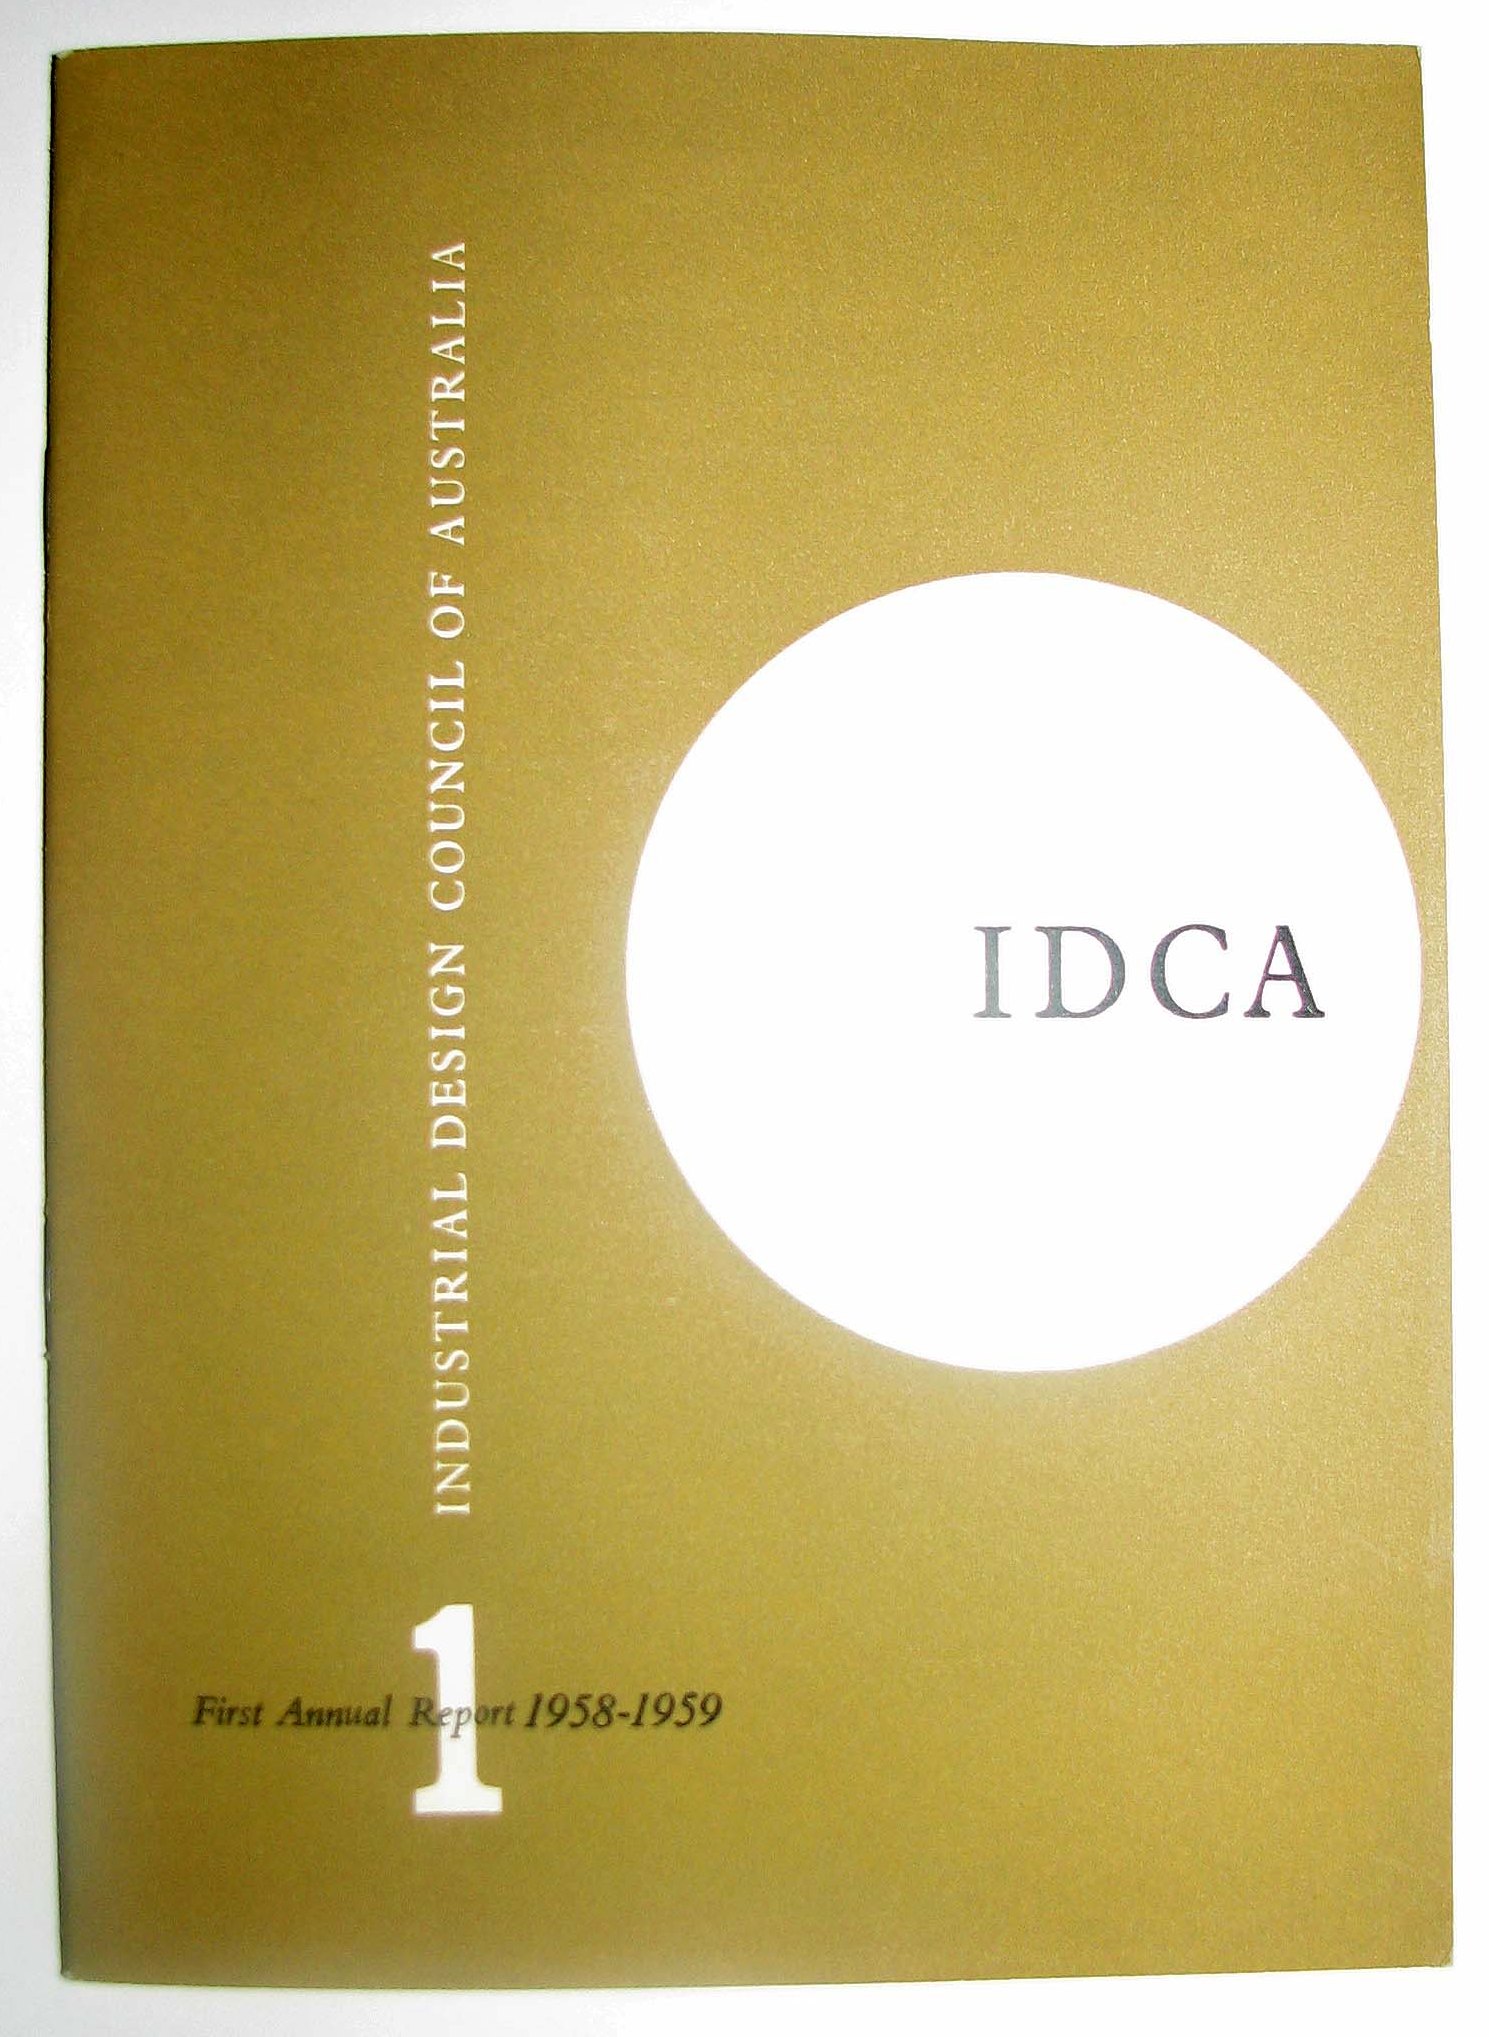 Industrial Design Council of Australia Archive